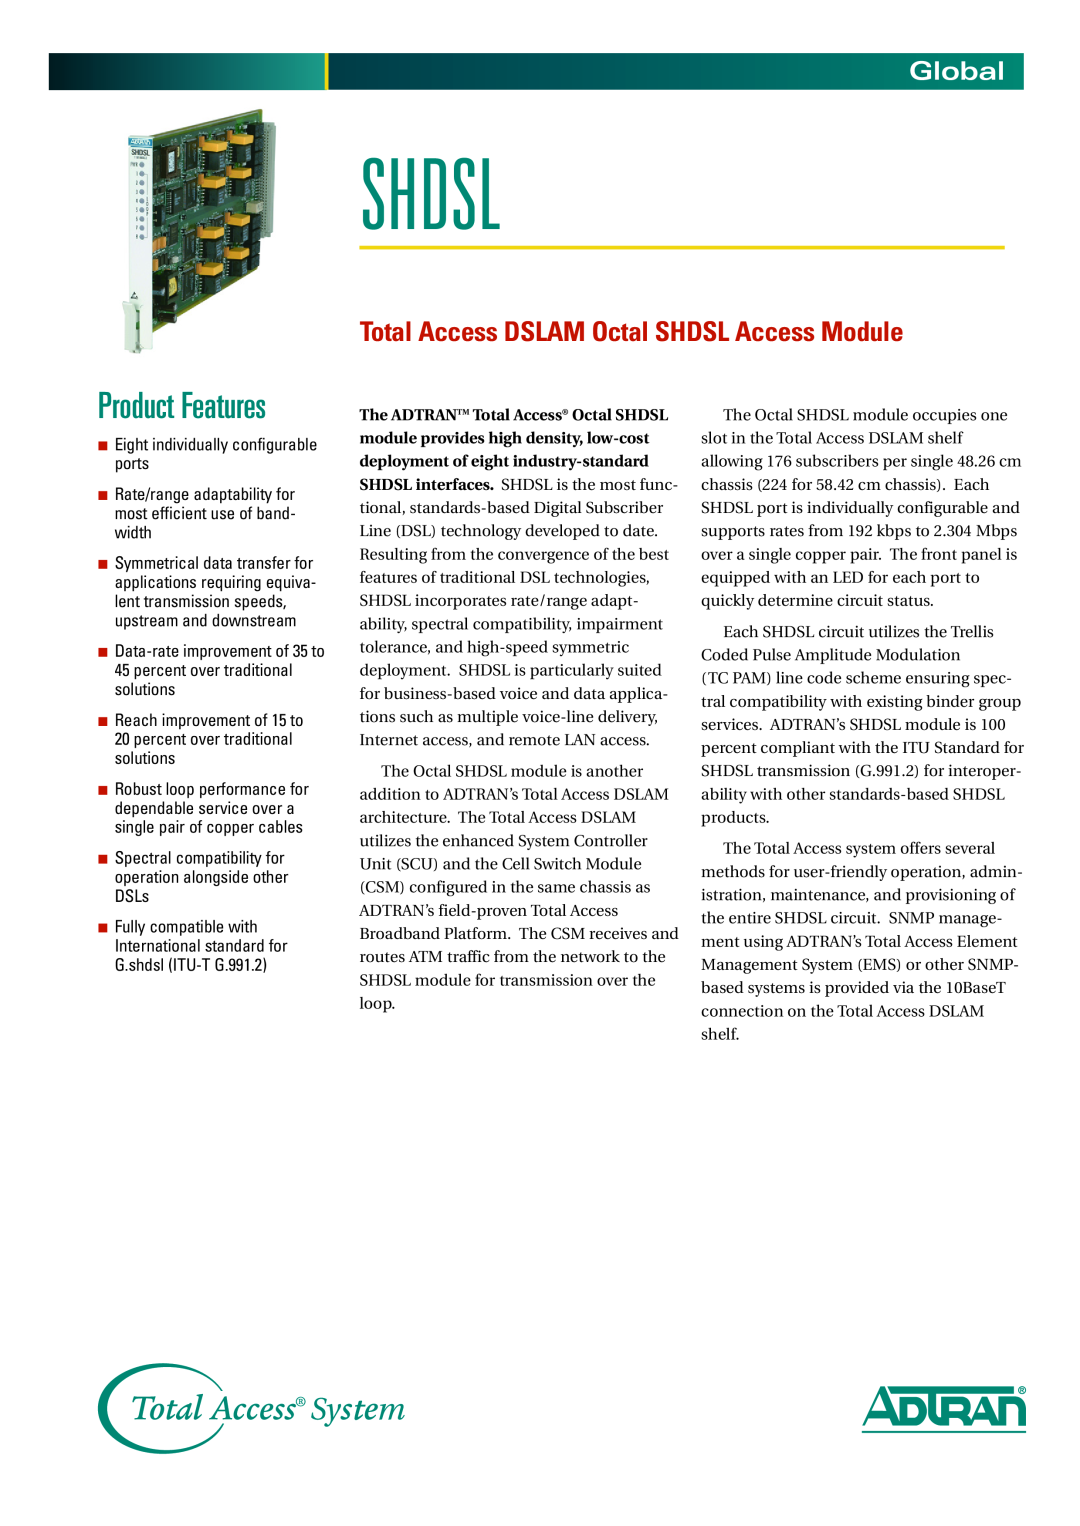 ADTRAN manual Total Access DSLAM Octal SHDSL Access Module, Shdsl, Product Features, Global 